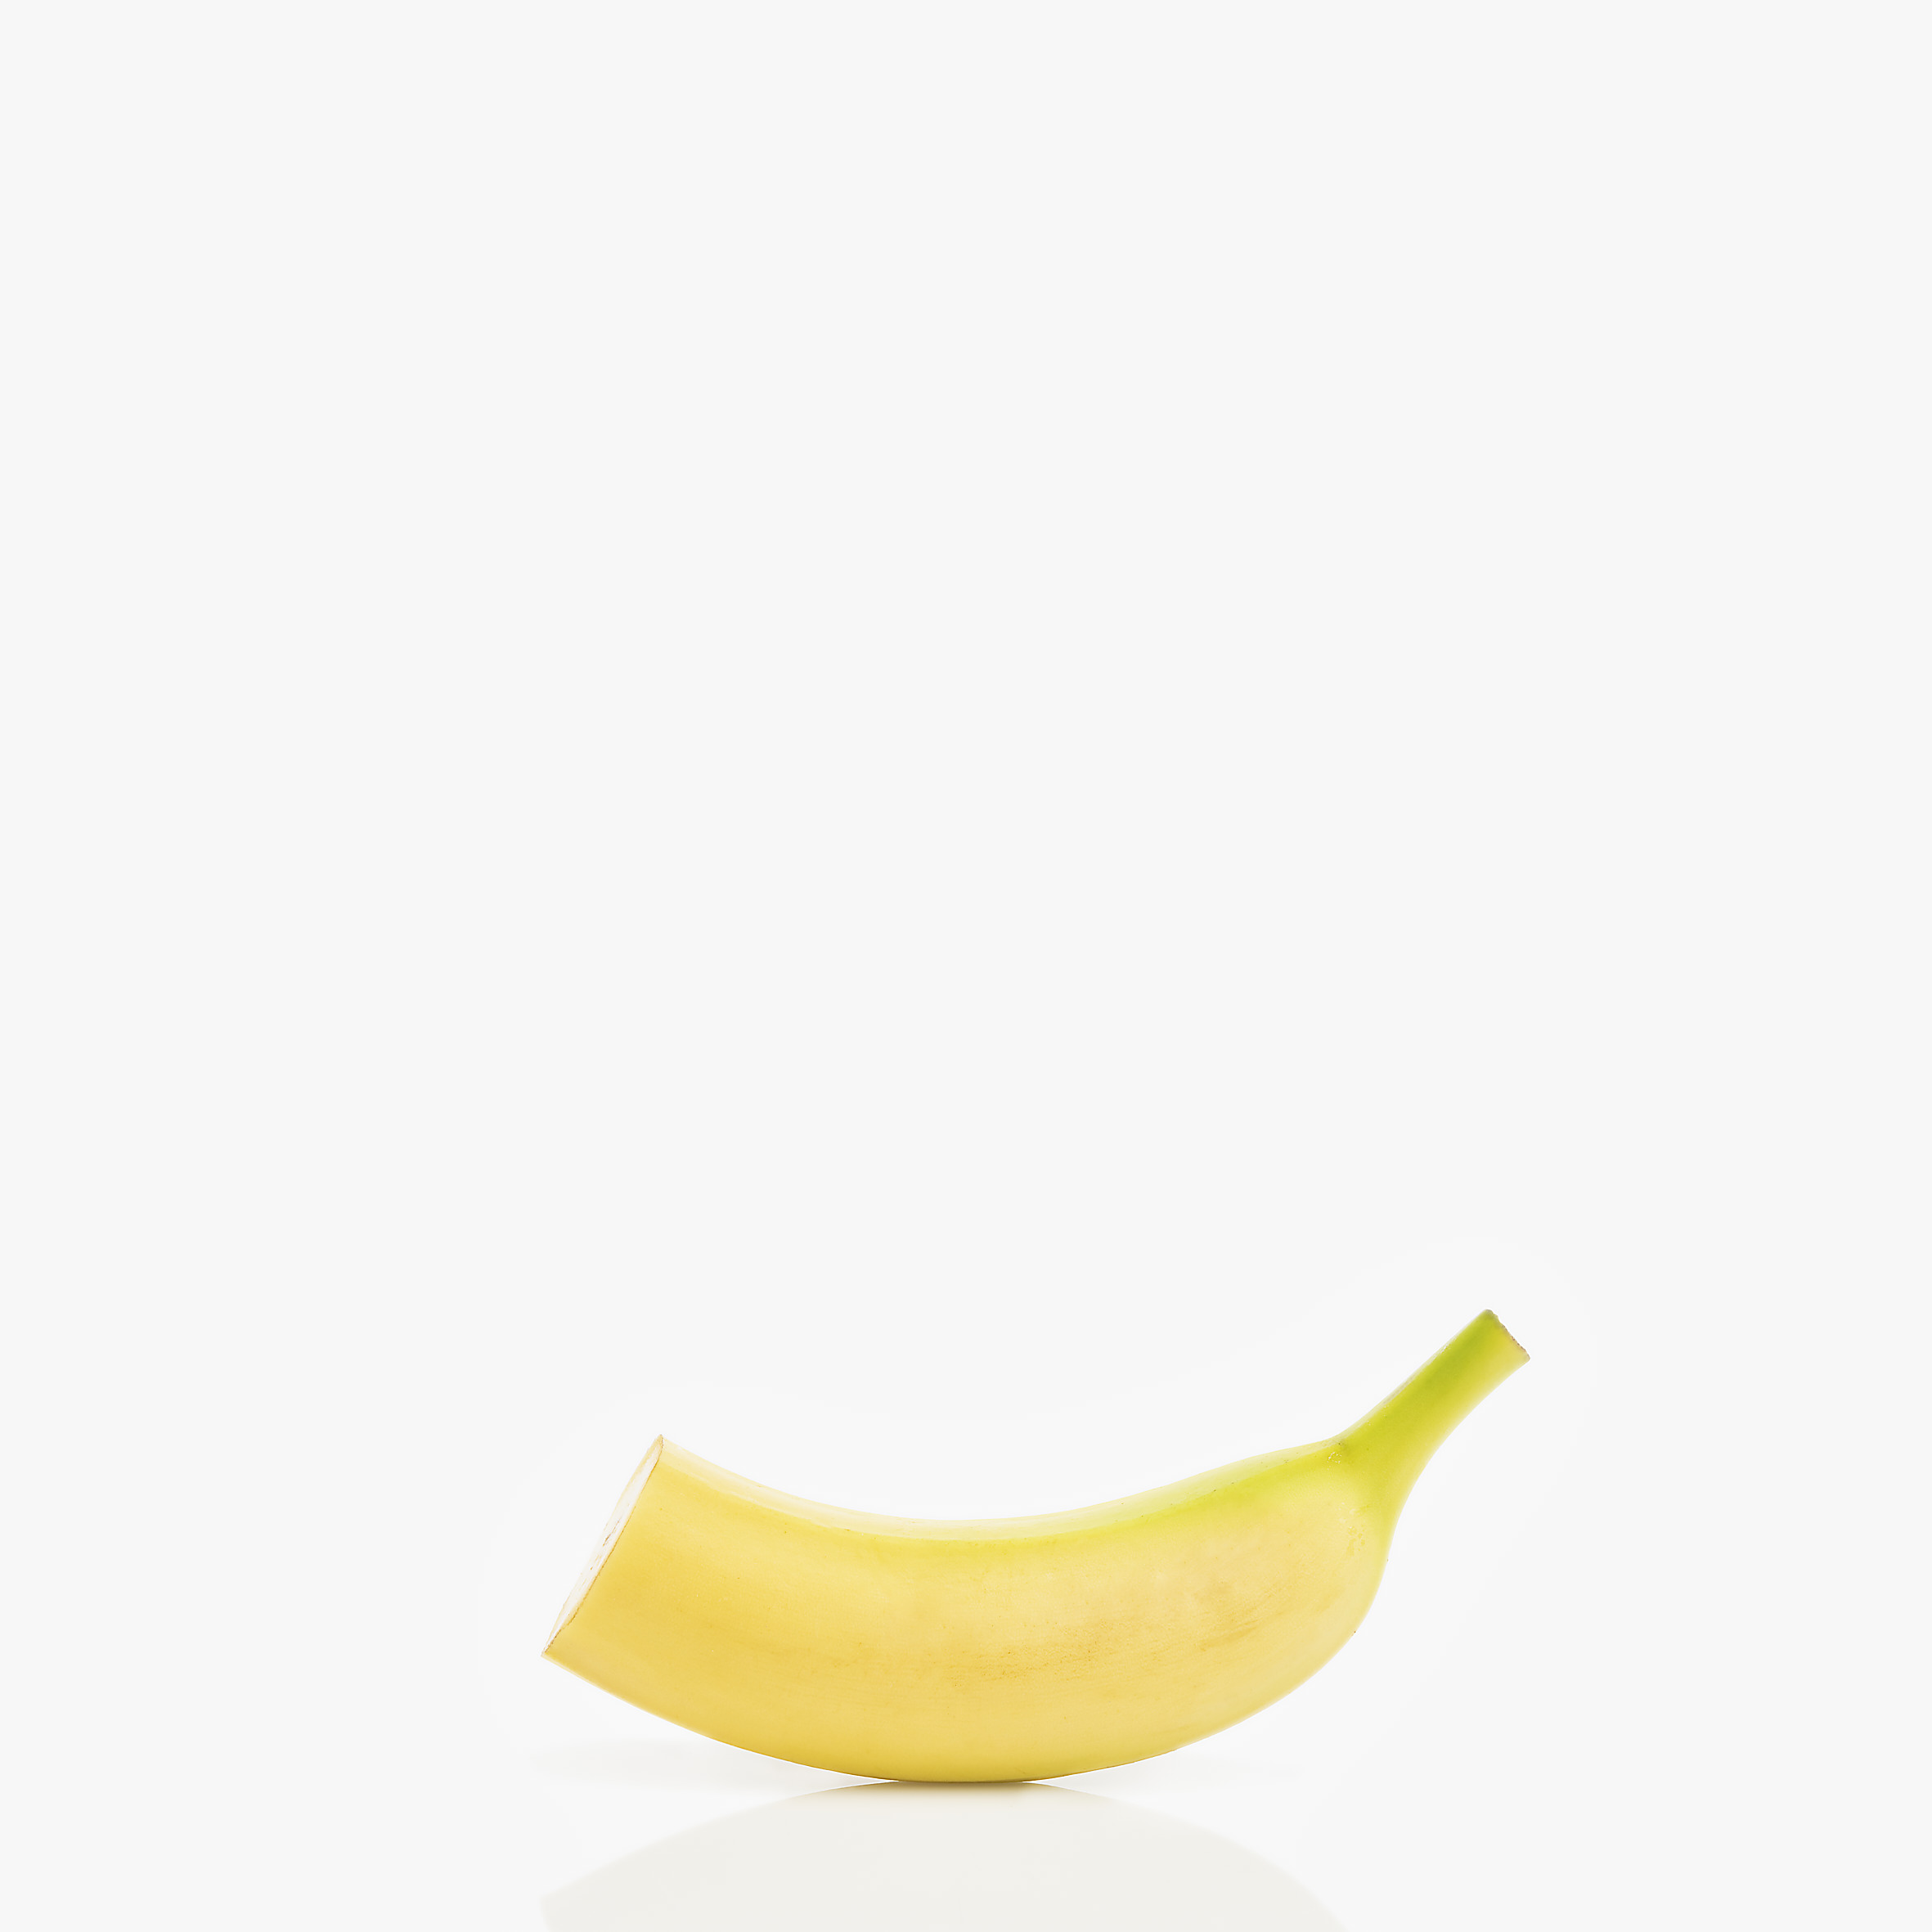 July 15, 2020 | $1= 8,500 L.L. | 143g Somali Banana